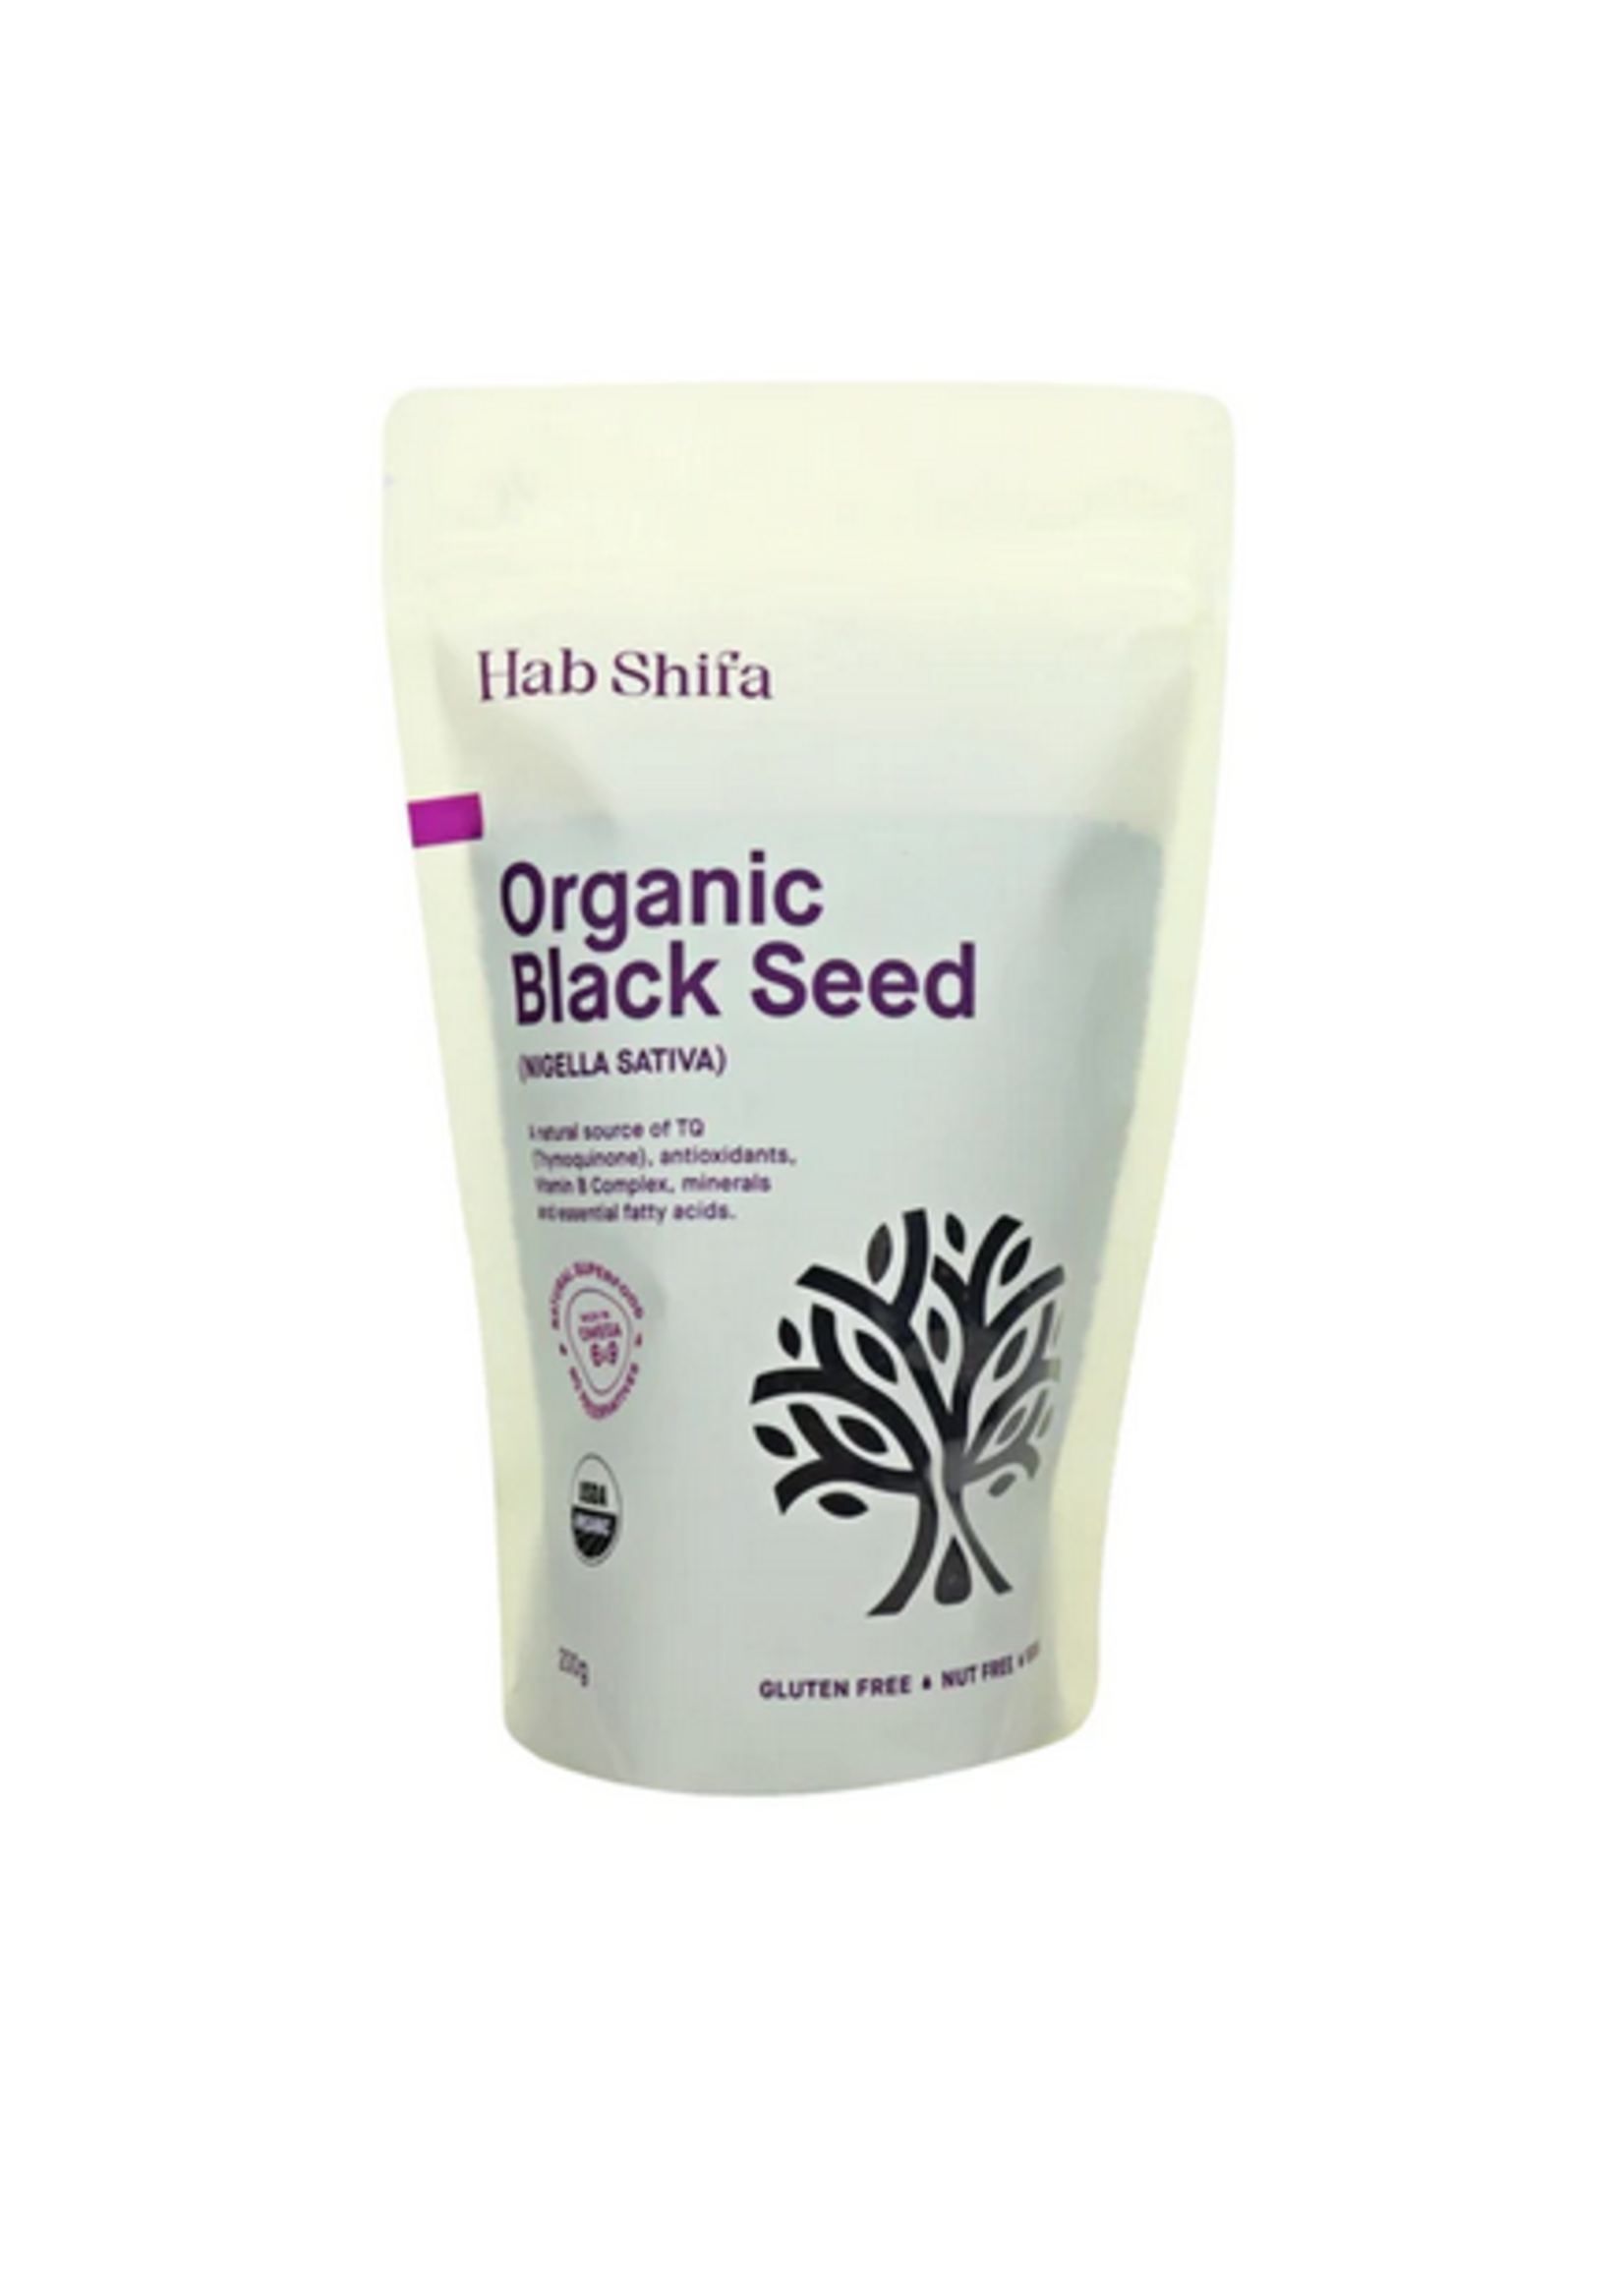 HAB SHIFA Hab Shifa Black Seed Organic  200g